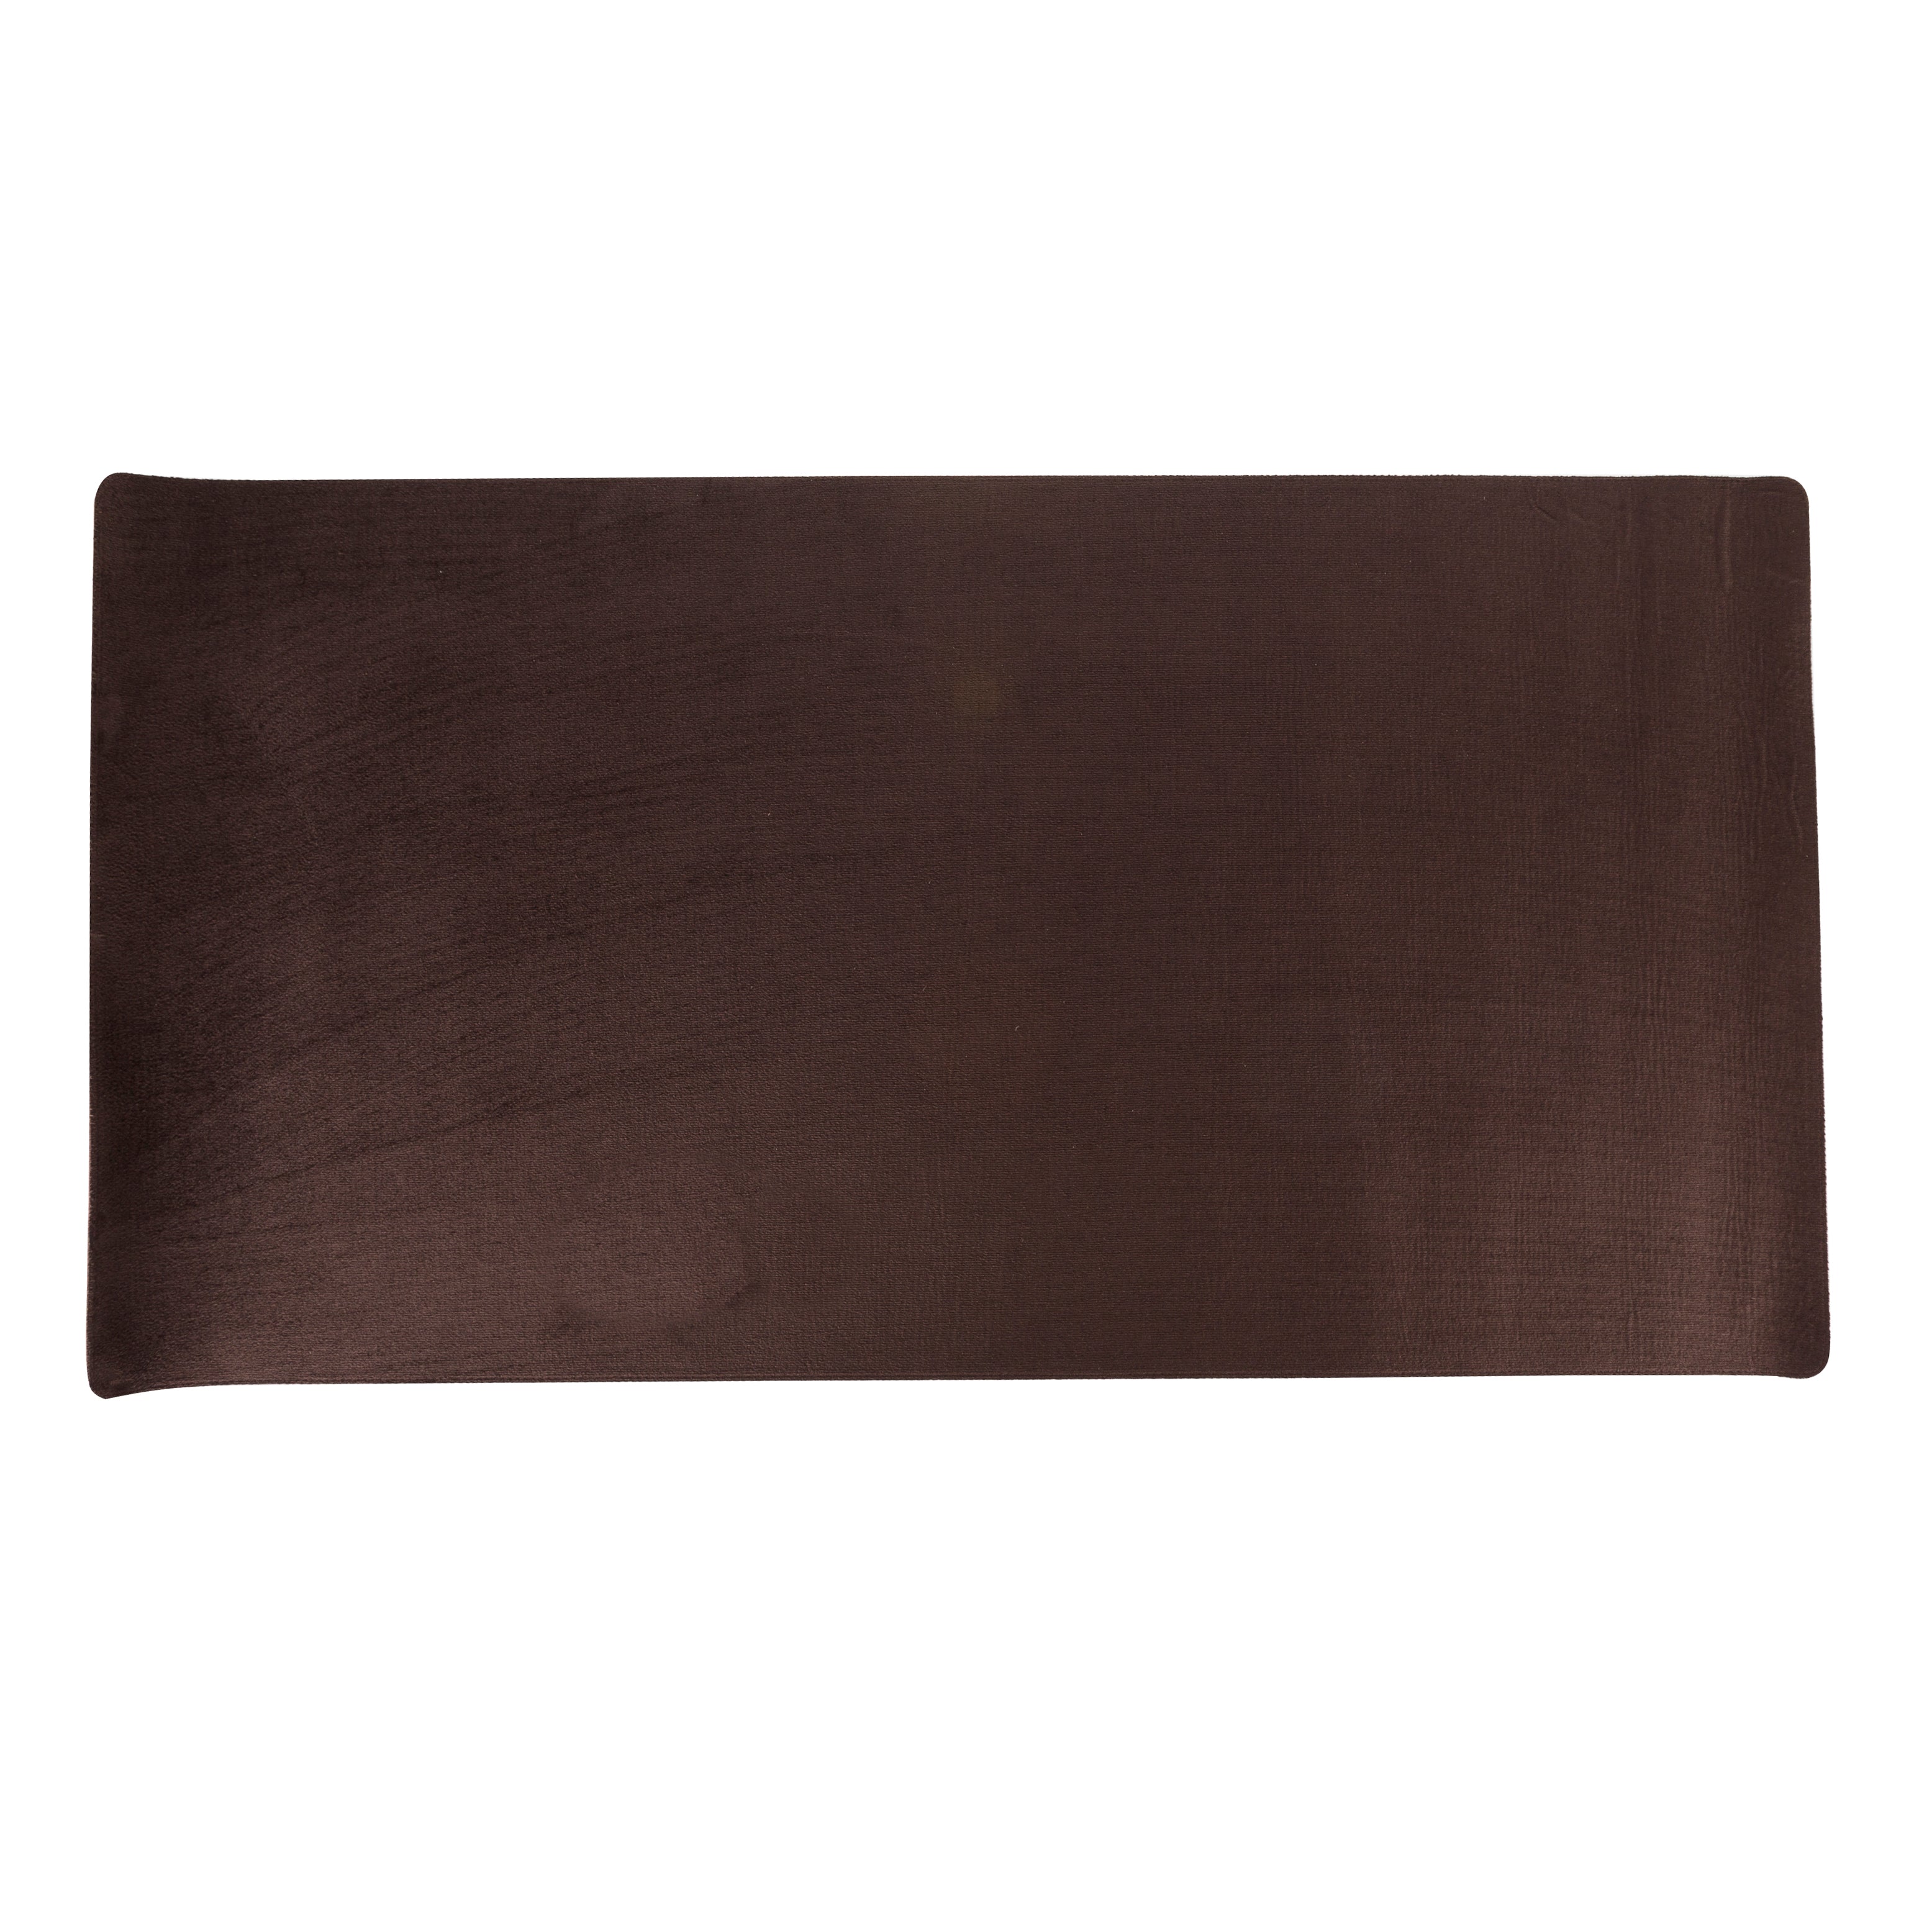 DelfiCase Genuine Dark Brown Leather Deskmat, Computer Pad, Office Desk Pad 4